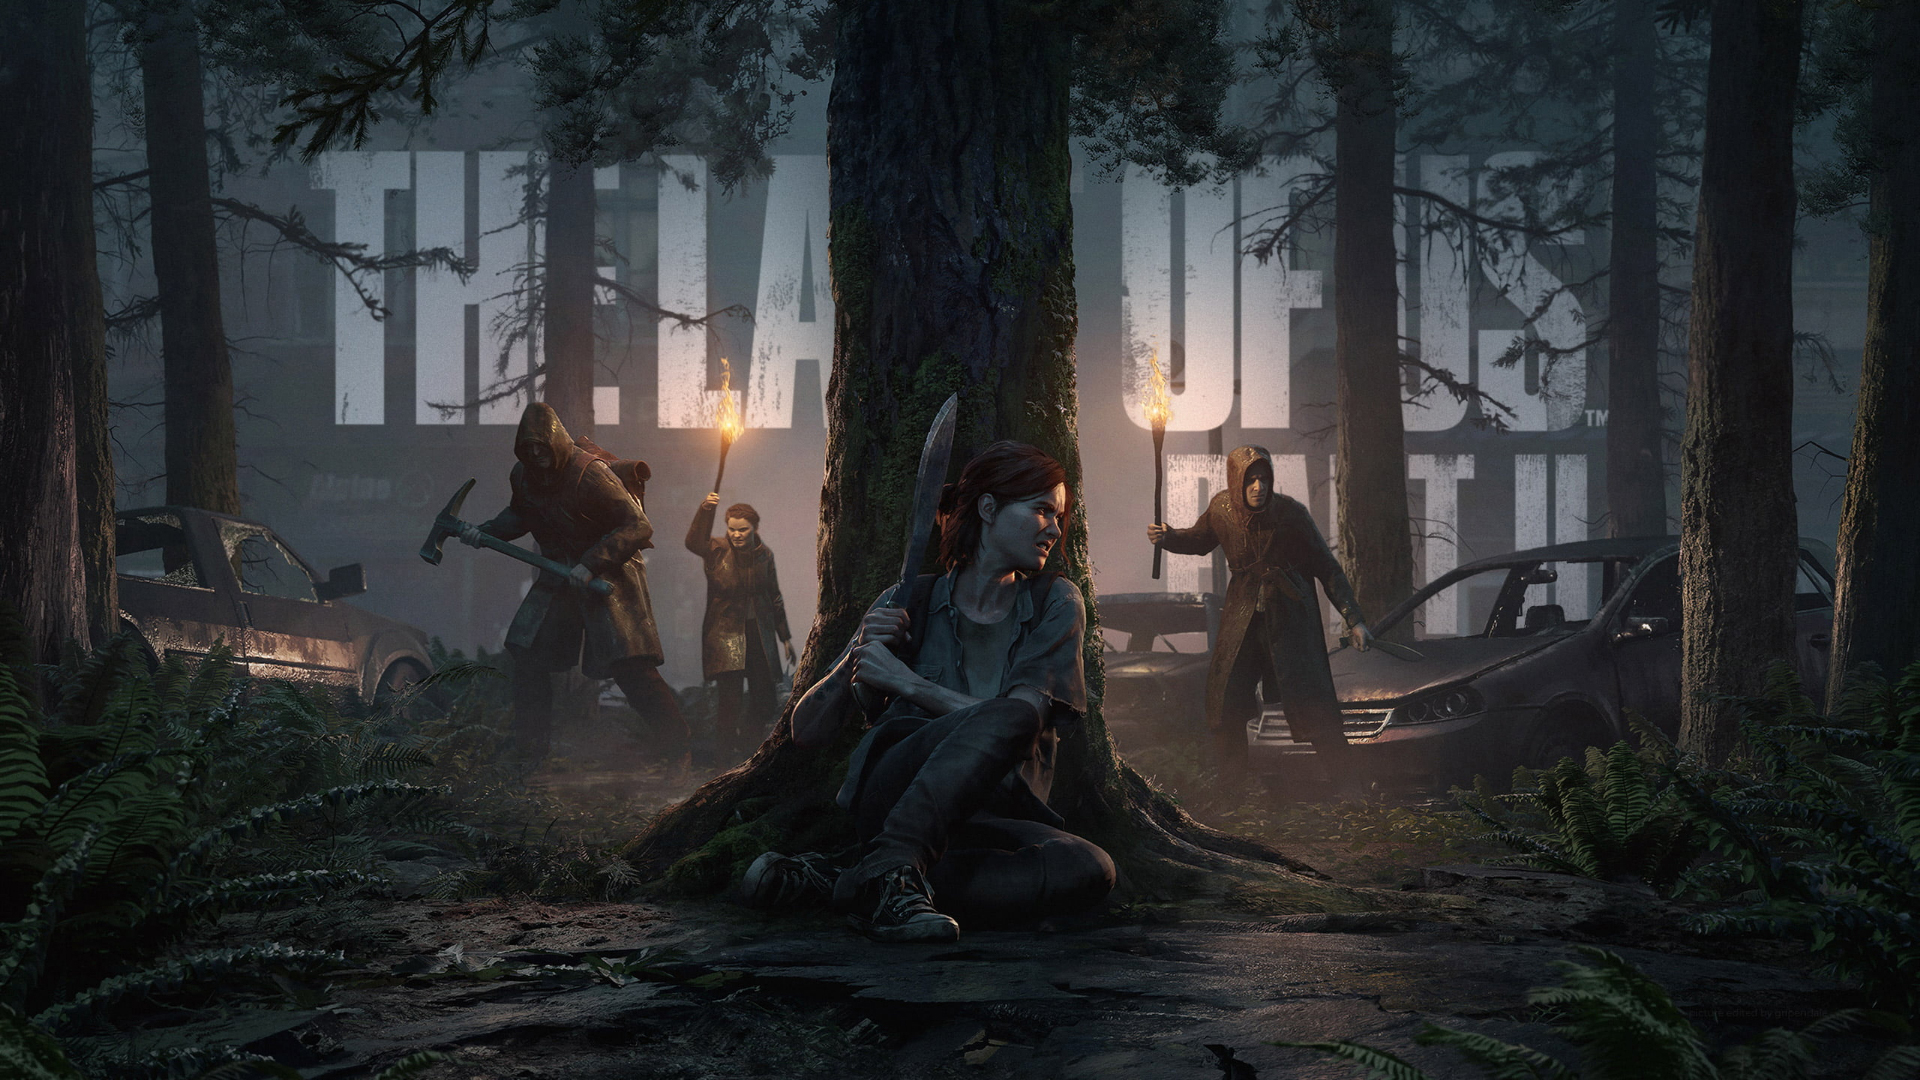 Ellie The Last of Us Part 2 4K Wallpaper #5.1372